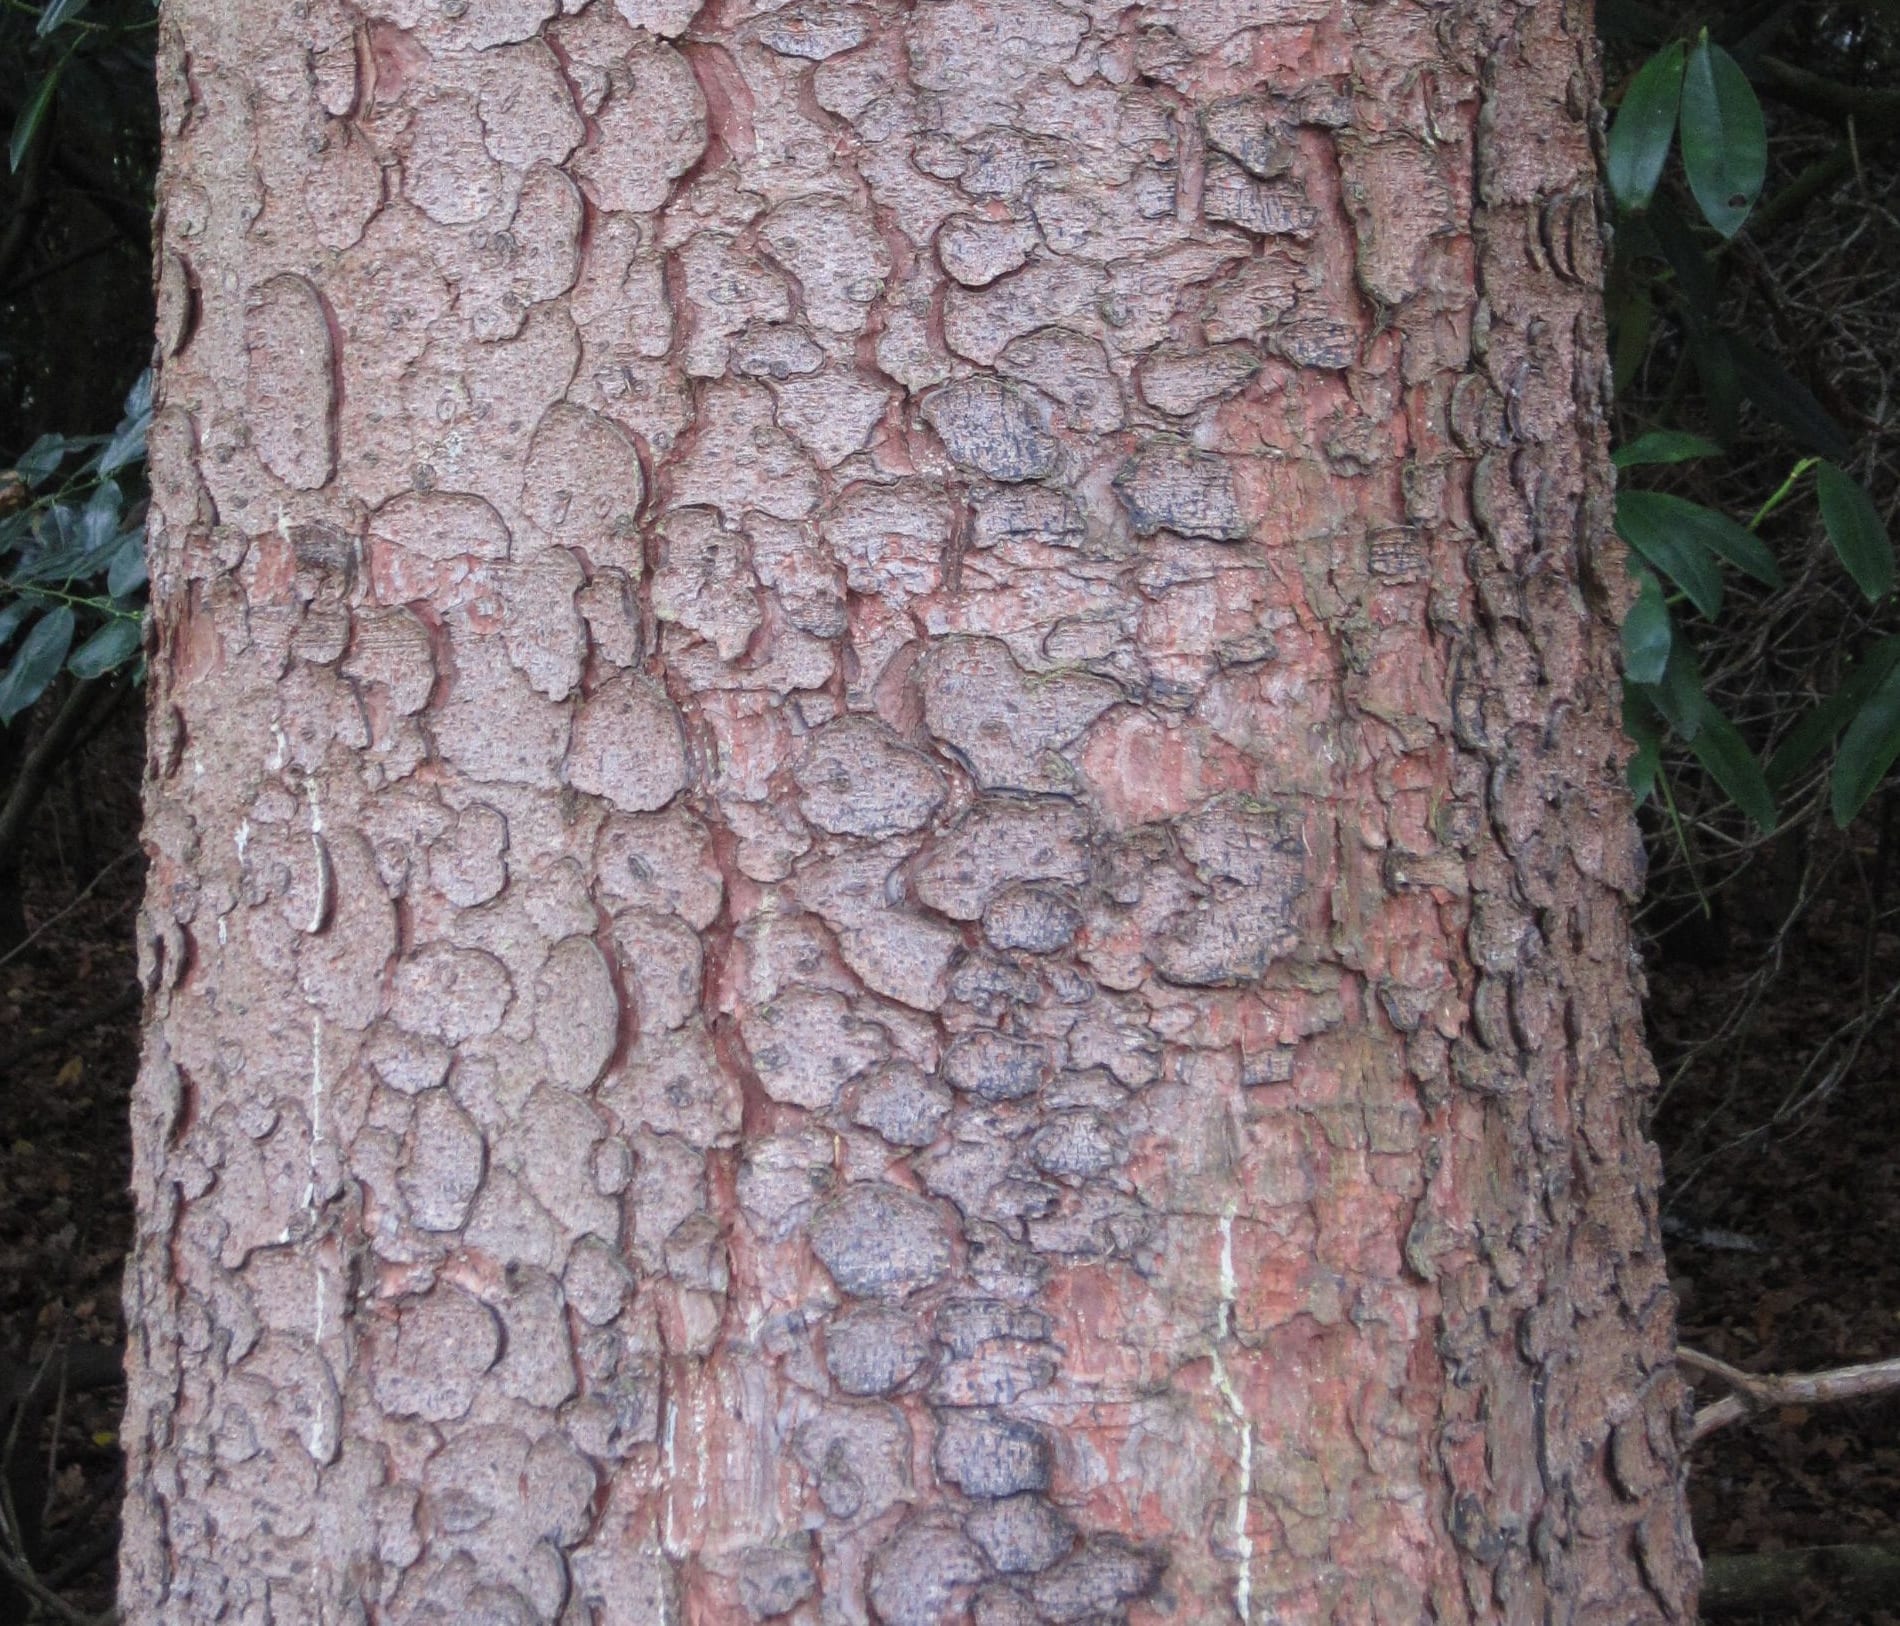 Norway Spruce bark